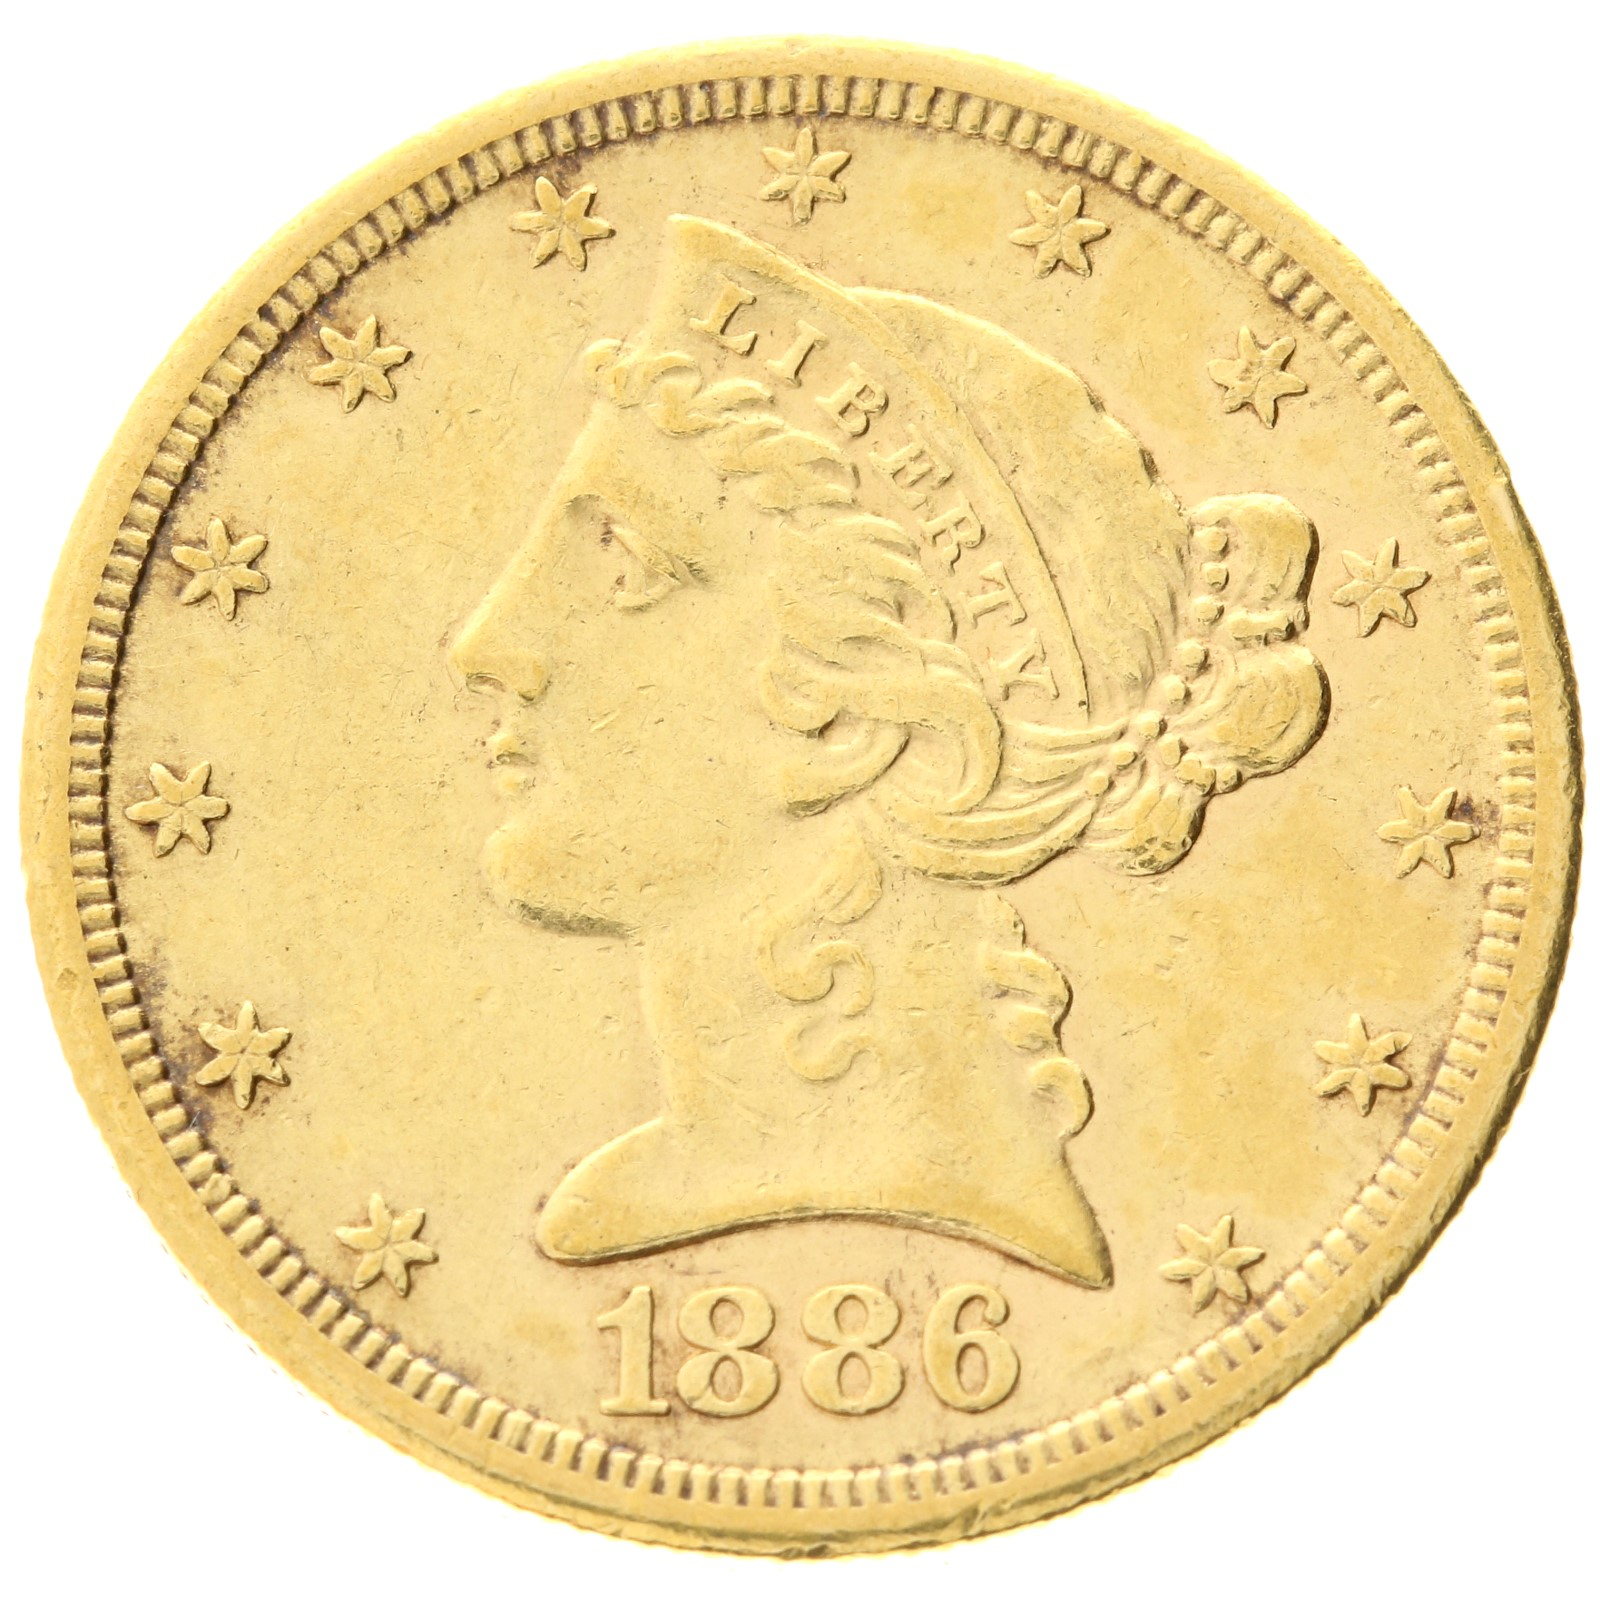 USA - 5 dollars - 1886 - S - Liberty / Coronet Head